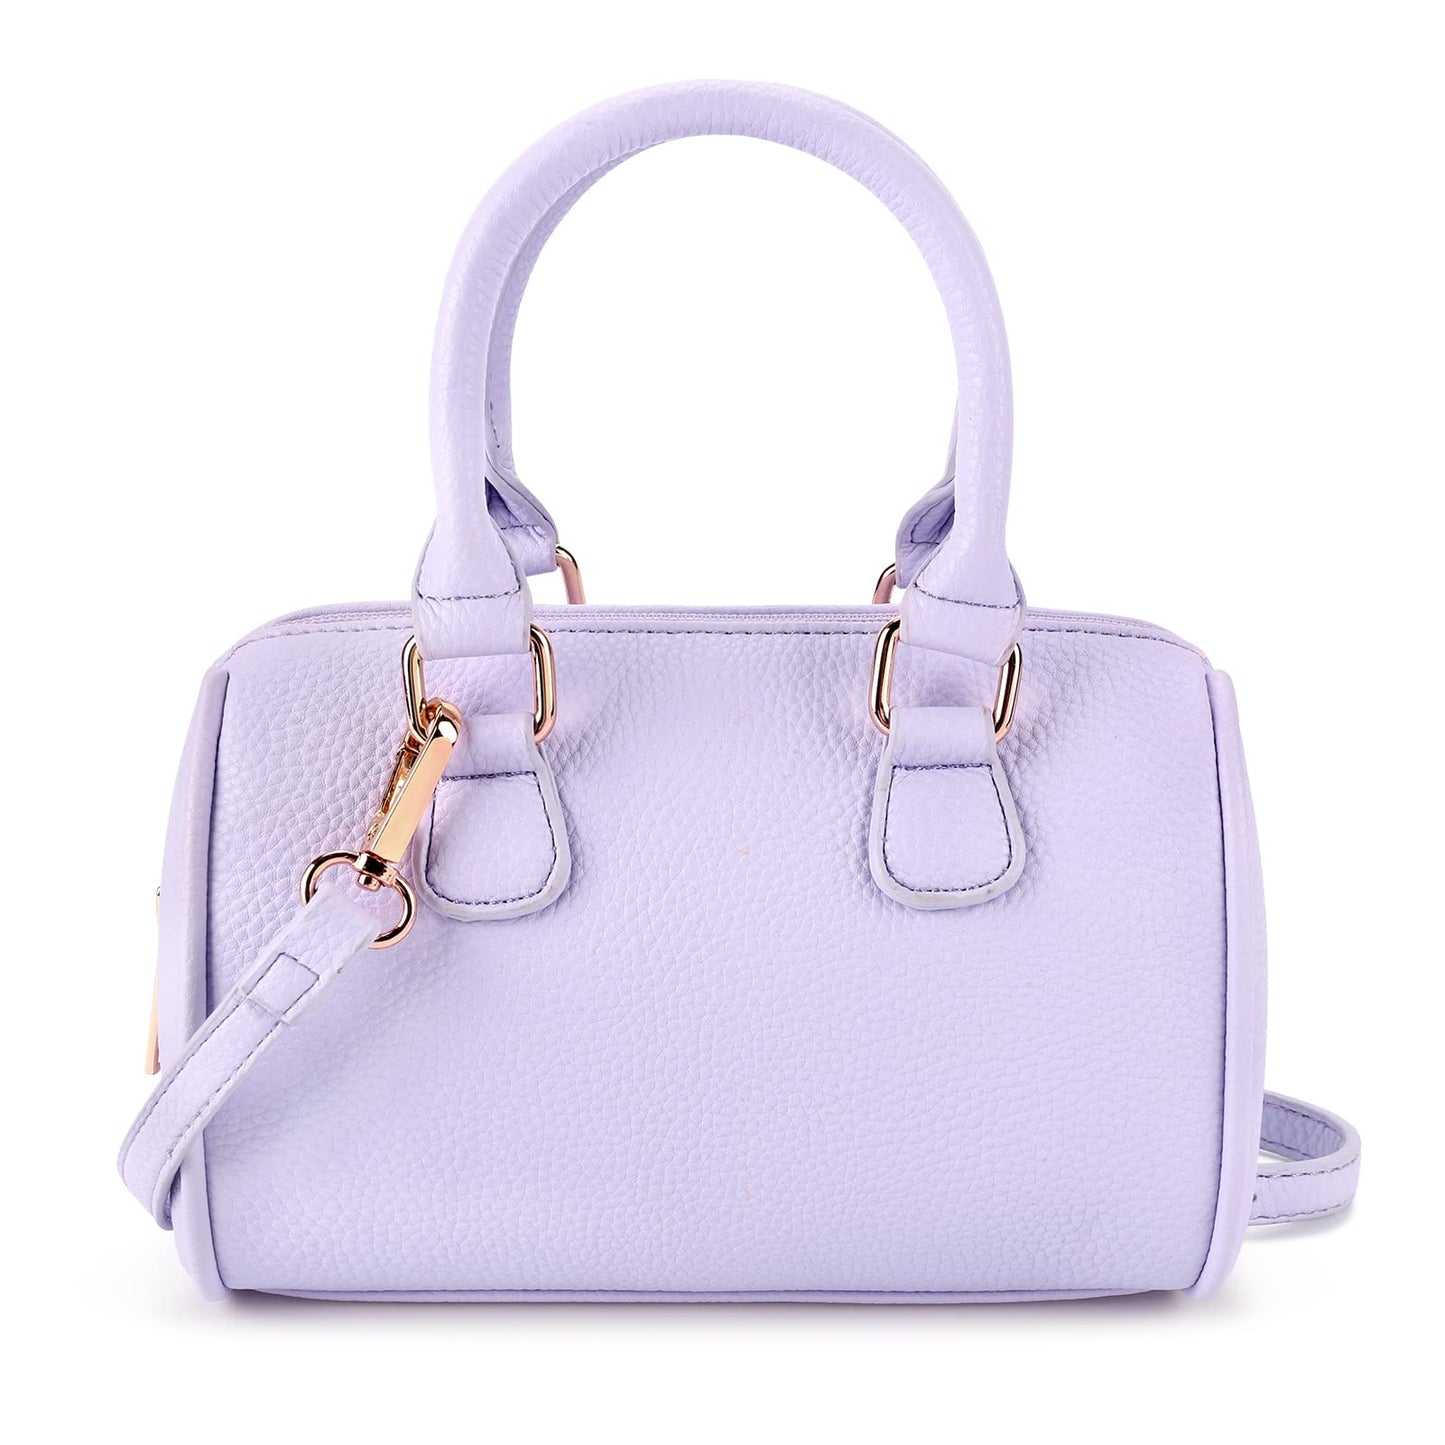 So Grown-Up Handbag Mibasies Light Purple 